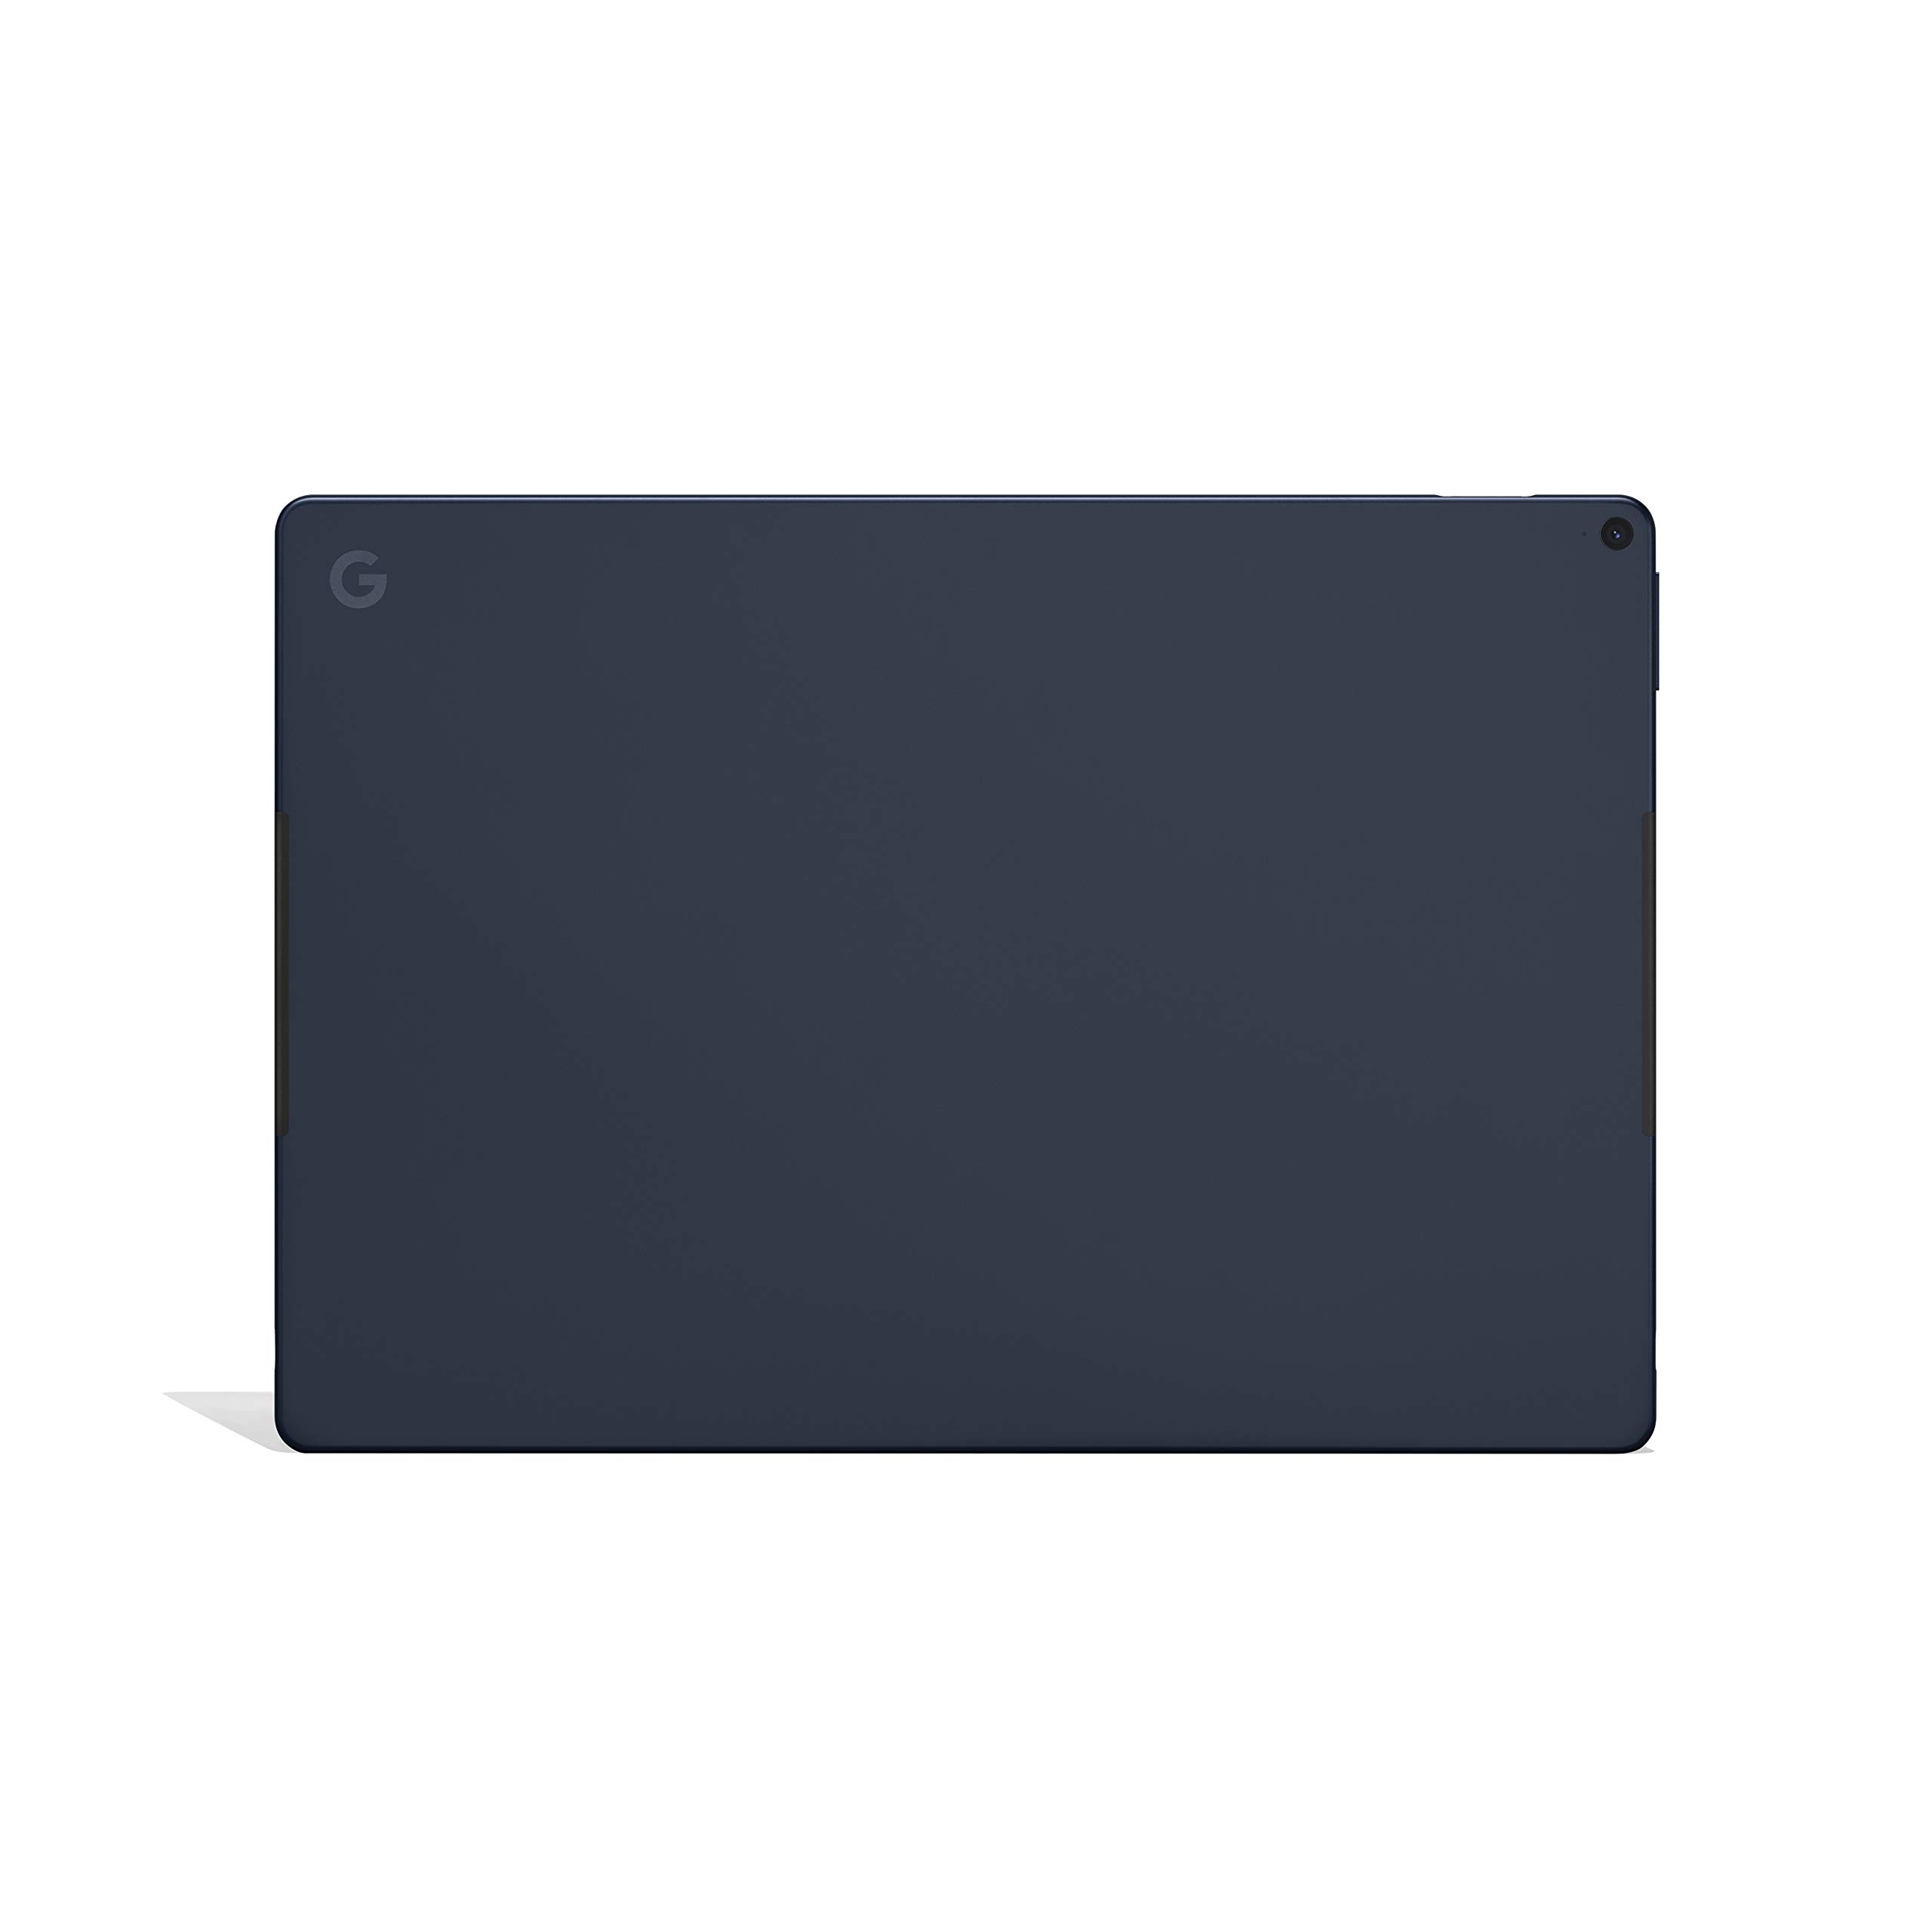 Google Pixel Slate 12.3-Inch 2 in 1 Tablet Intel Core i5, 8GB RAM, 128GB, Aspect Ratio 3:2